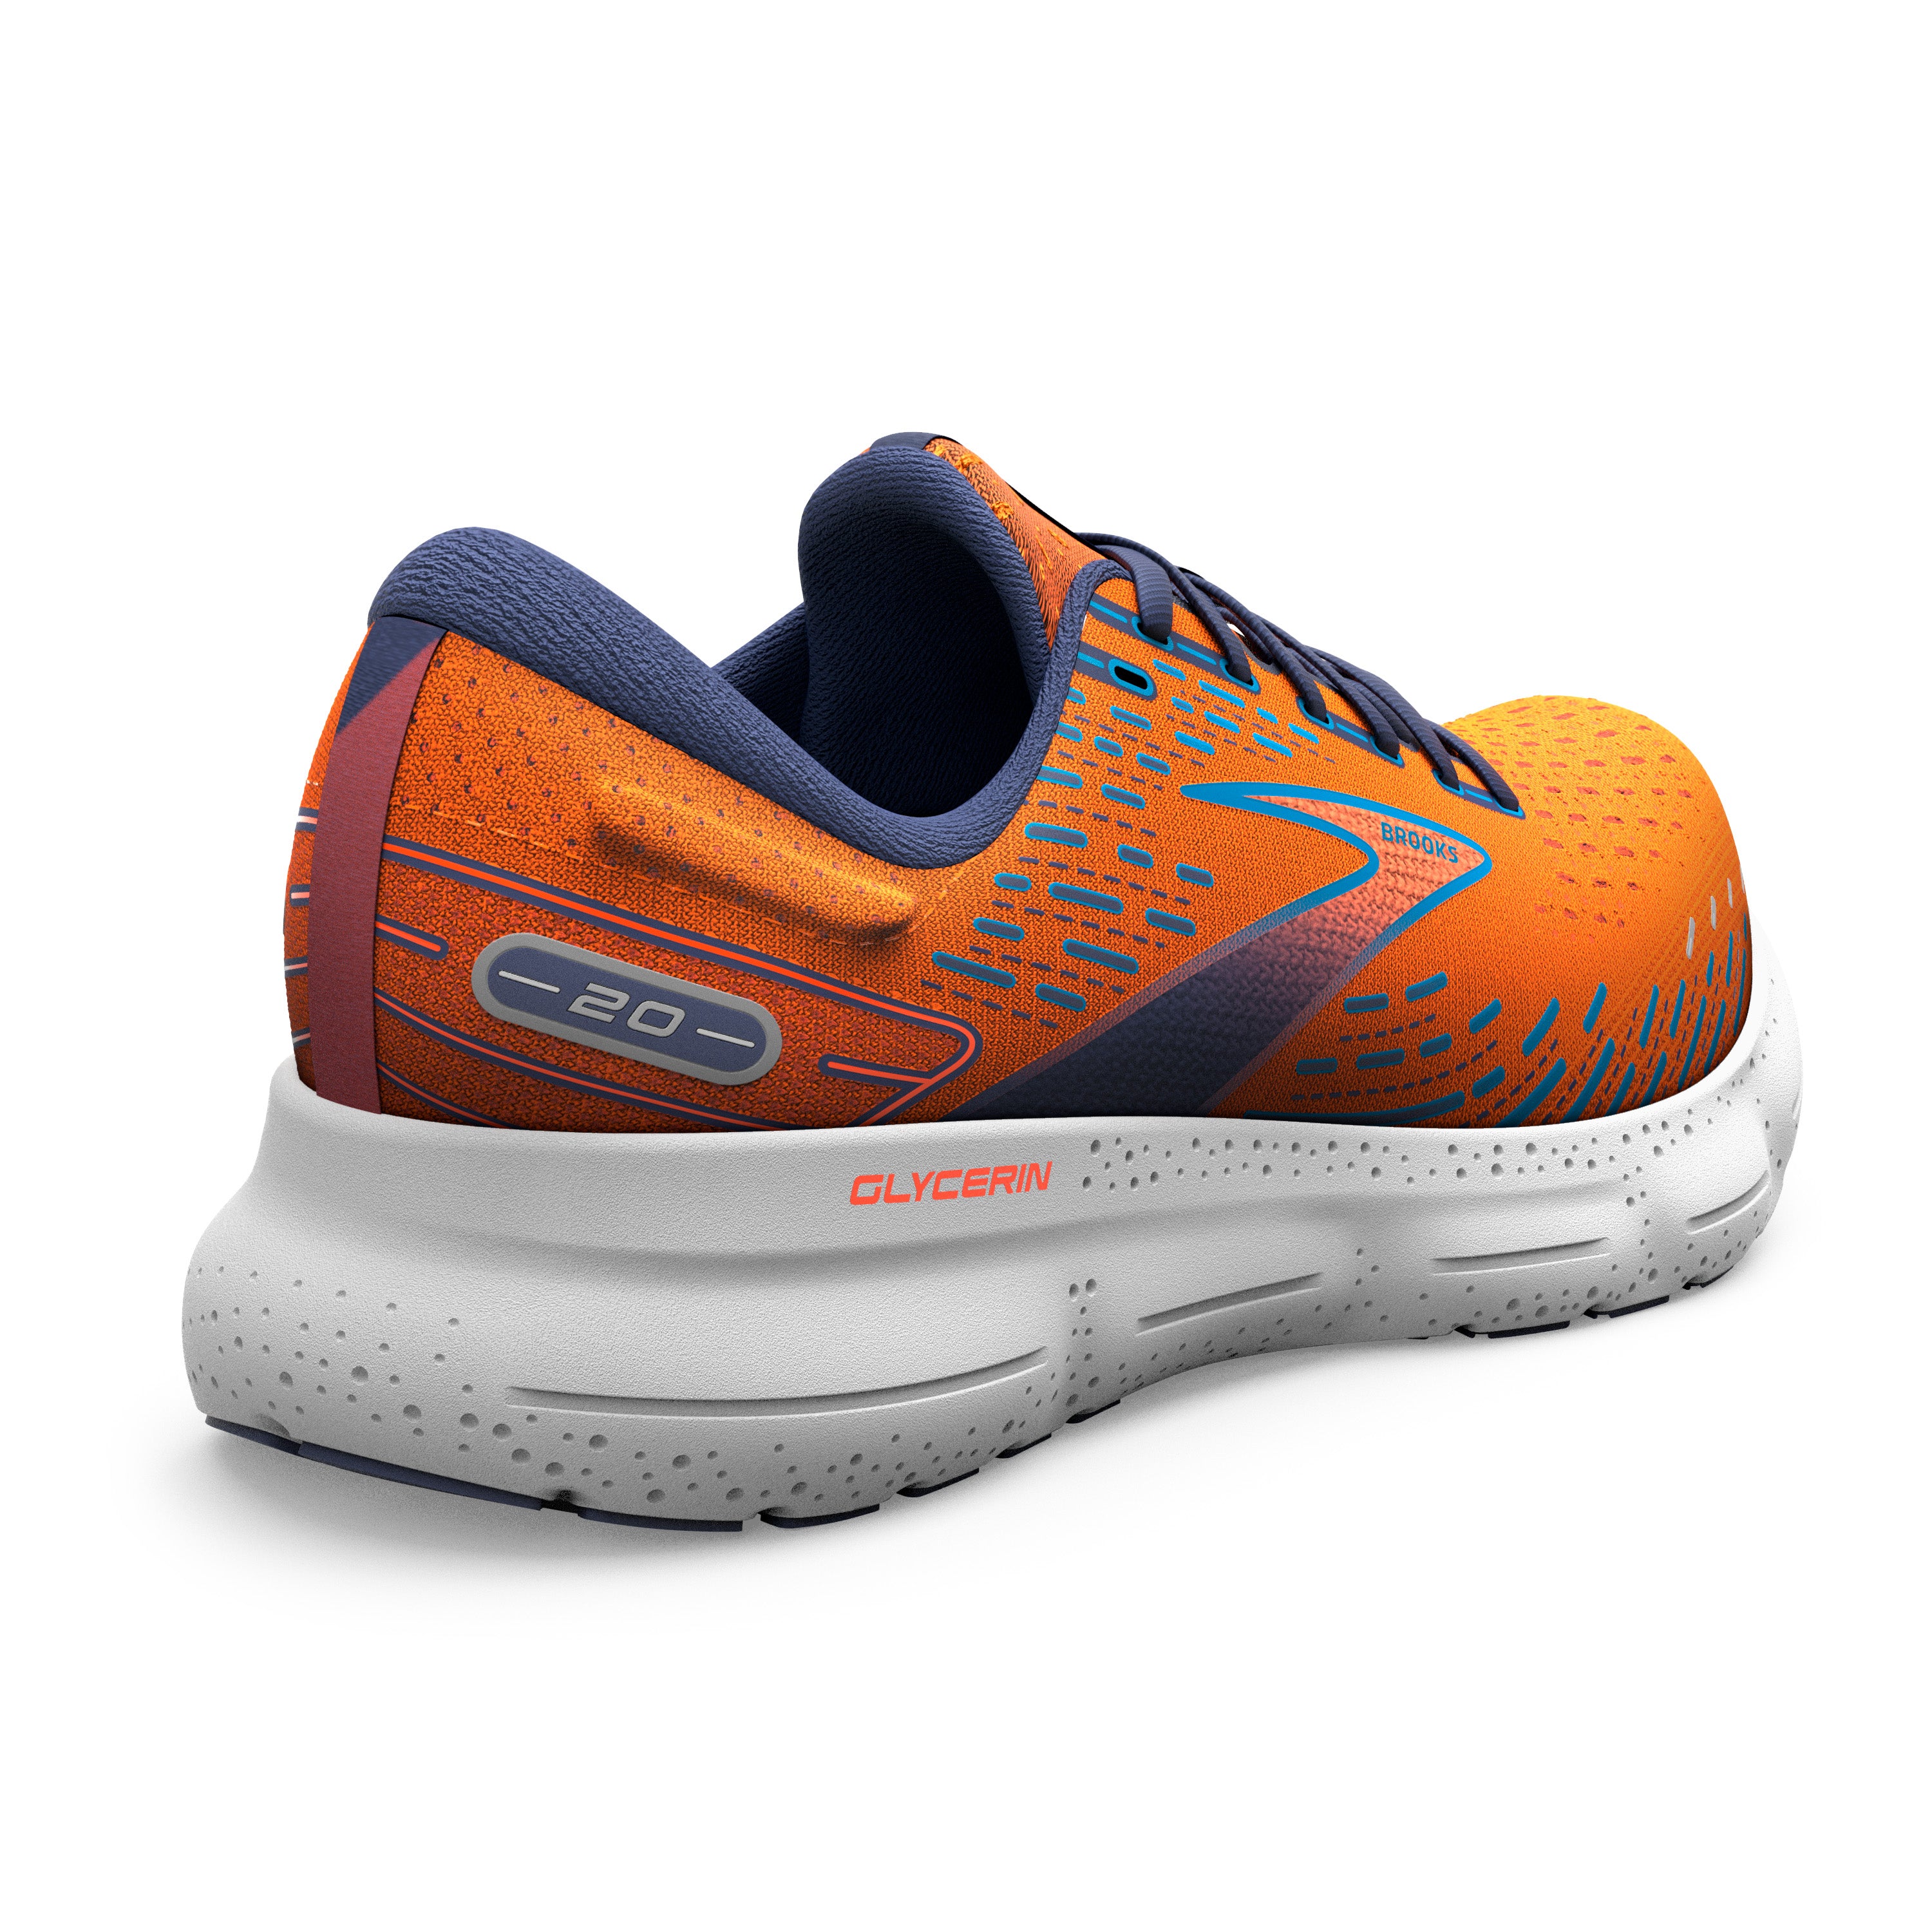 Glycerin 20 LE Men's - Road Running Shoes